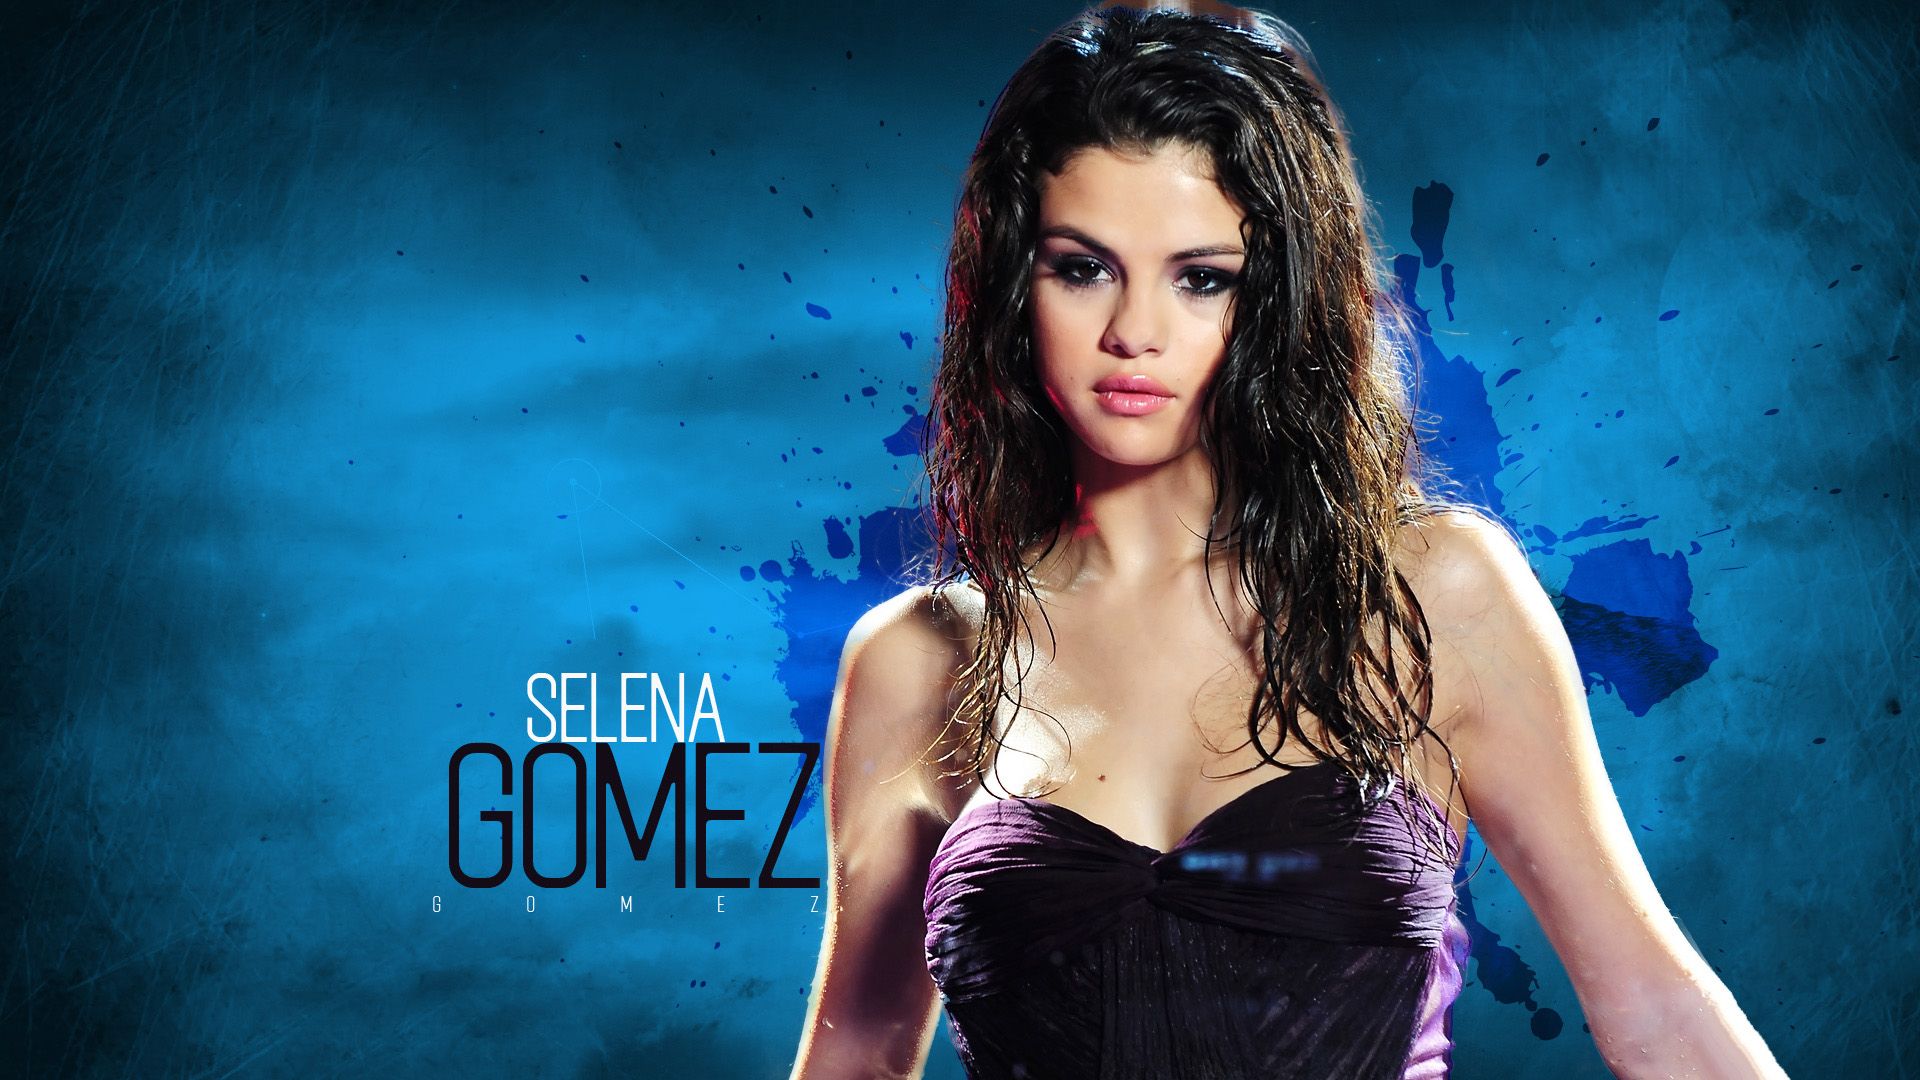 Selena Gomez Hot And Sexy Picture Selena Gomez New Album 19 Hd Wallpaper Backgrounds Download